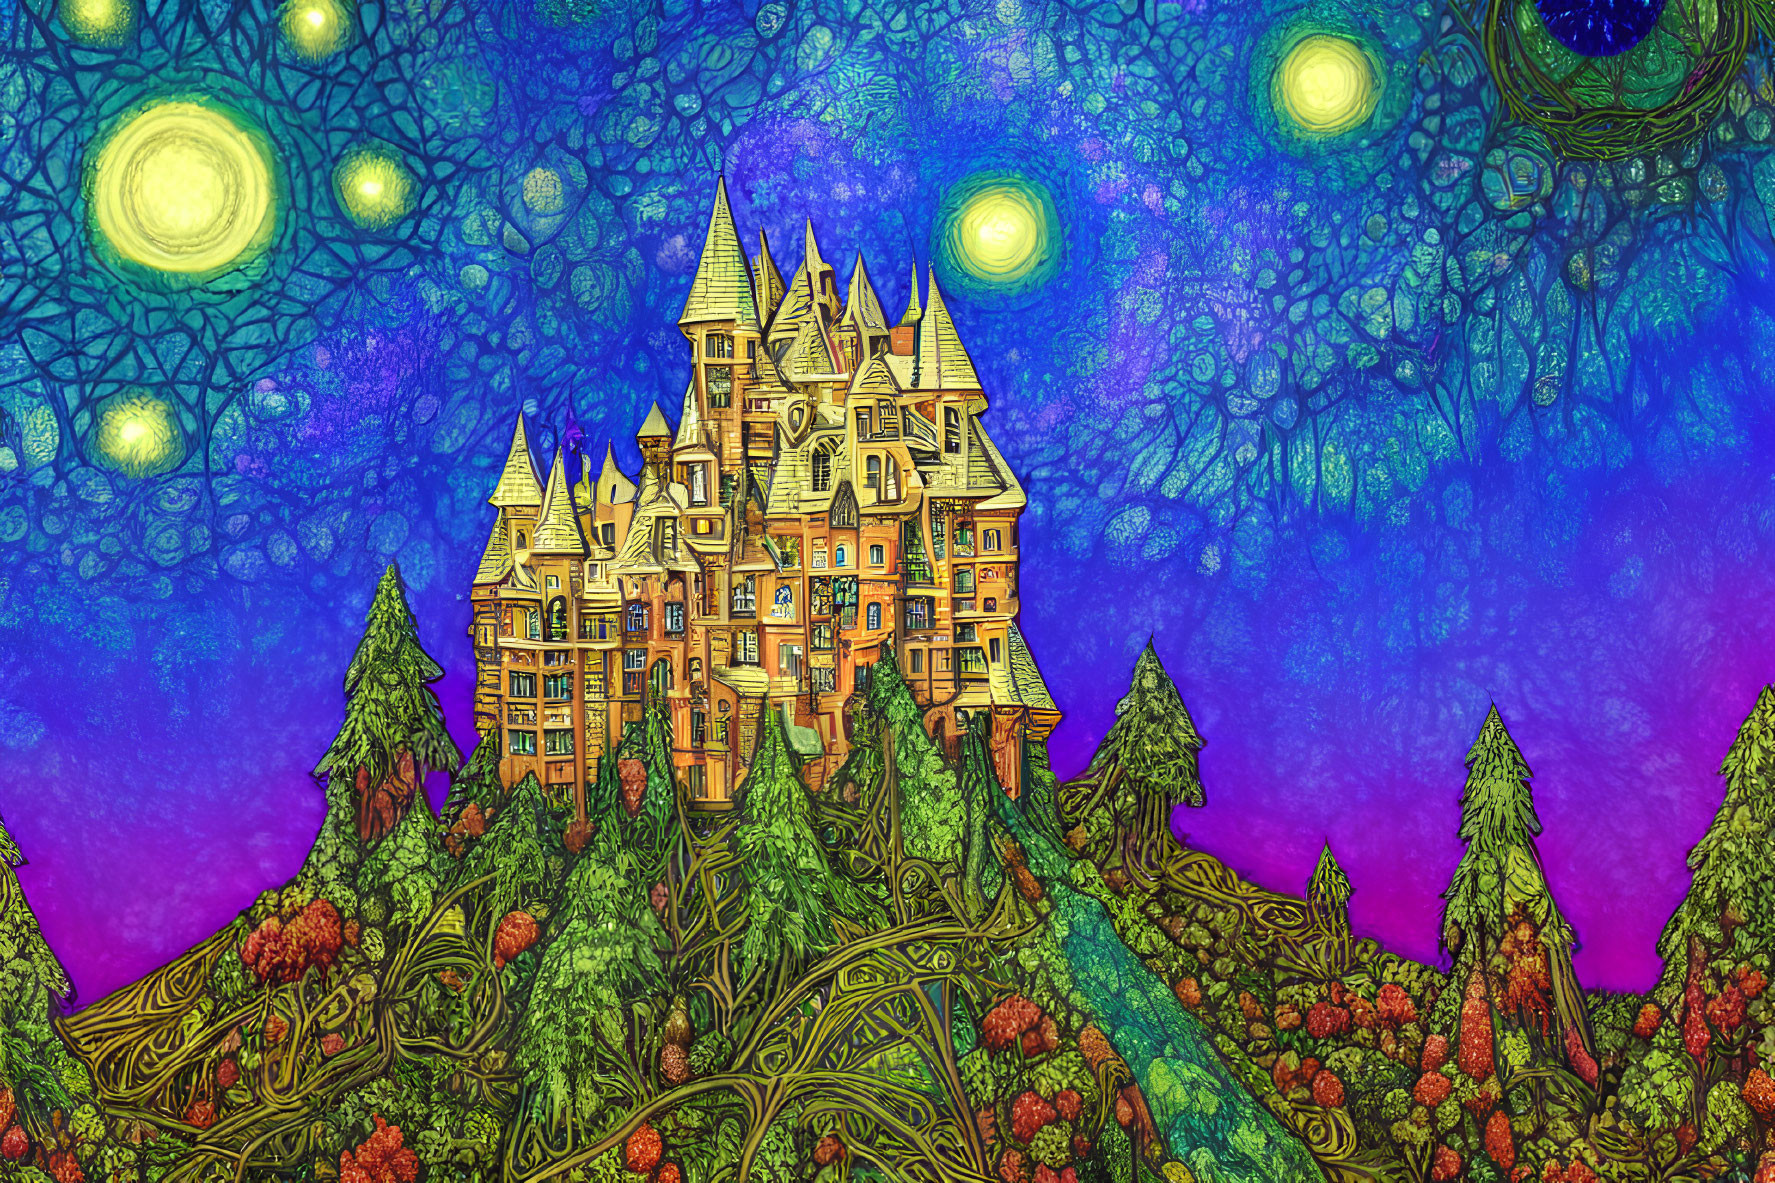 Detailed illustration: Fantastical castle in vibrant, colorful forest under starry sky